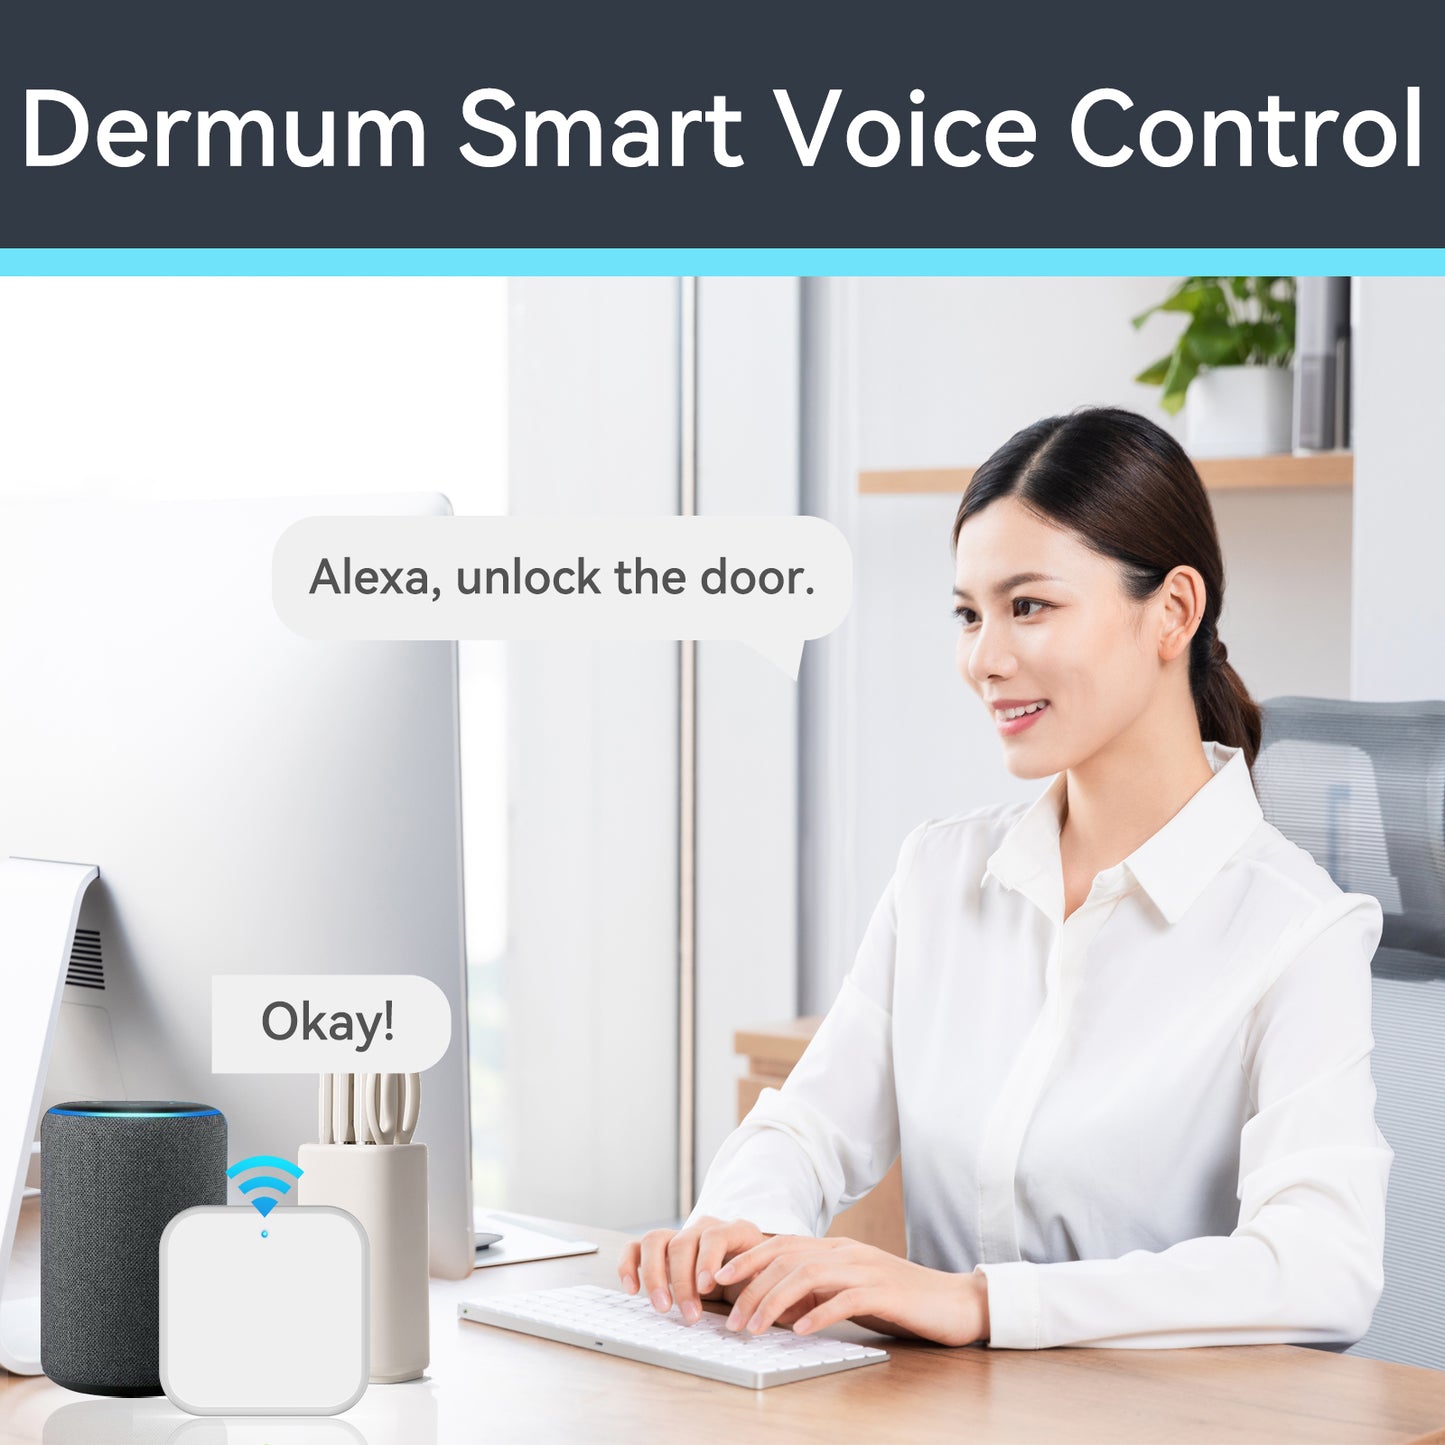 dermum smart voice control